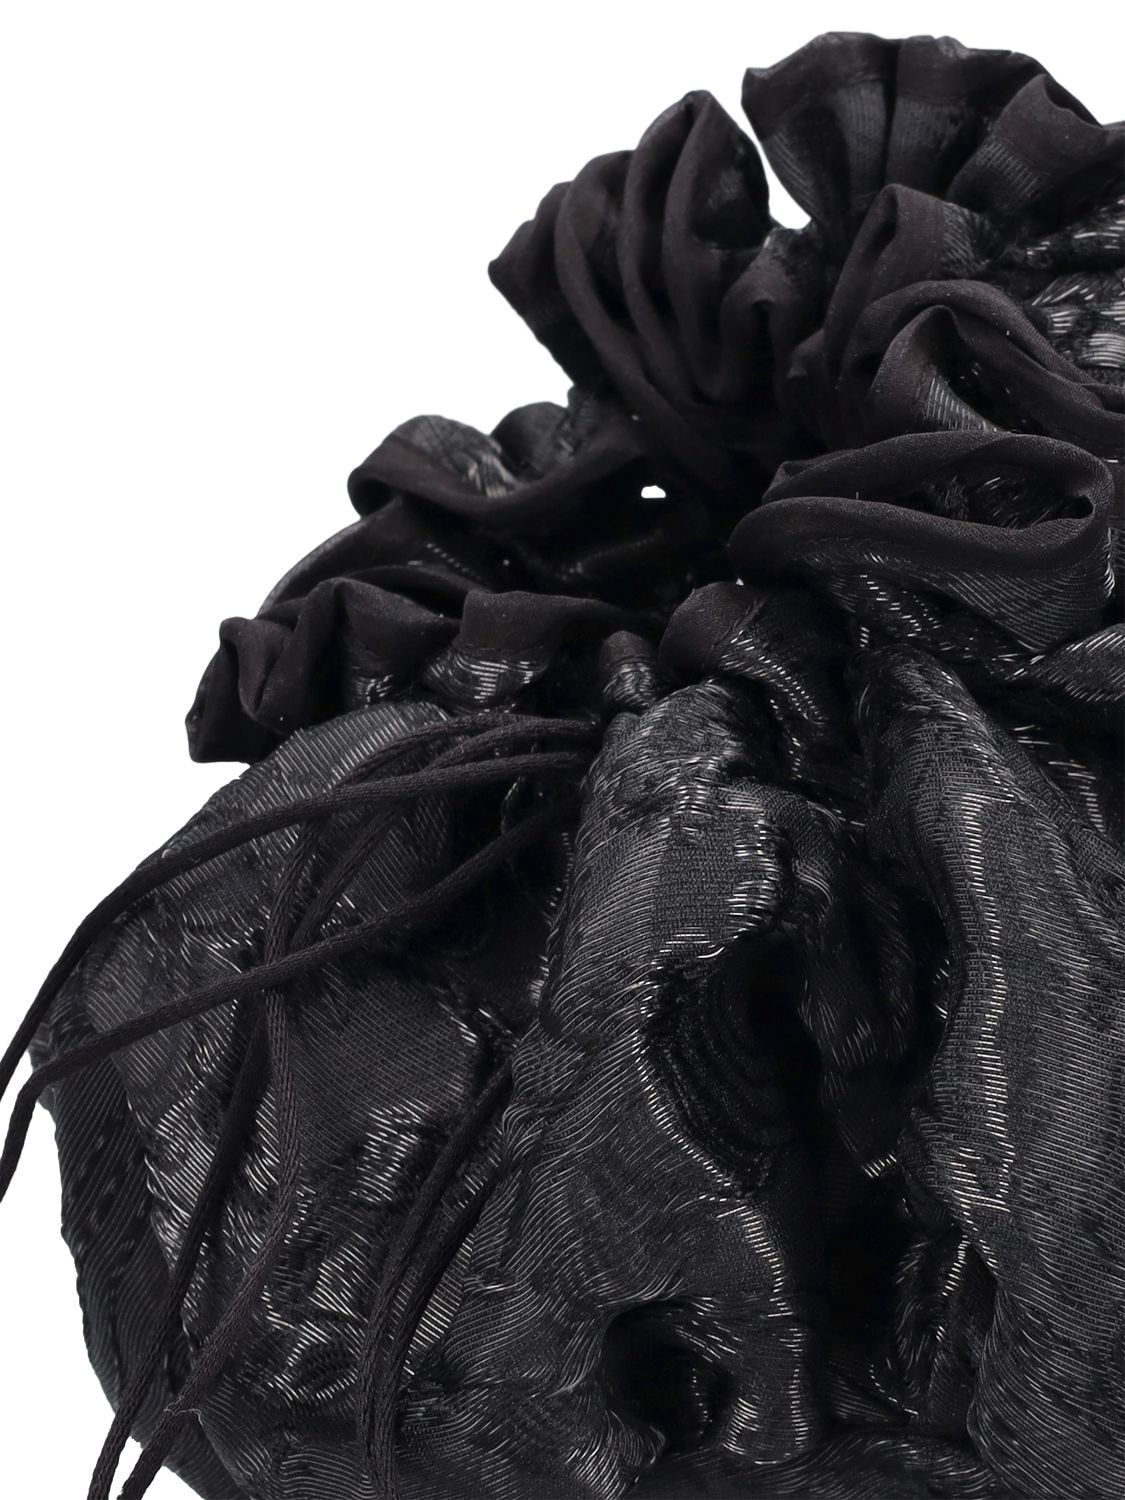 Sofie Luna Jacquard Top Handle Bag In Black